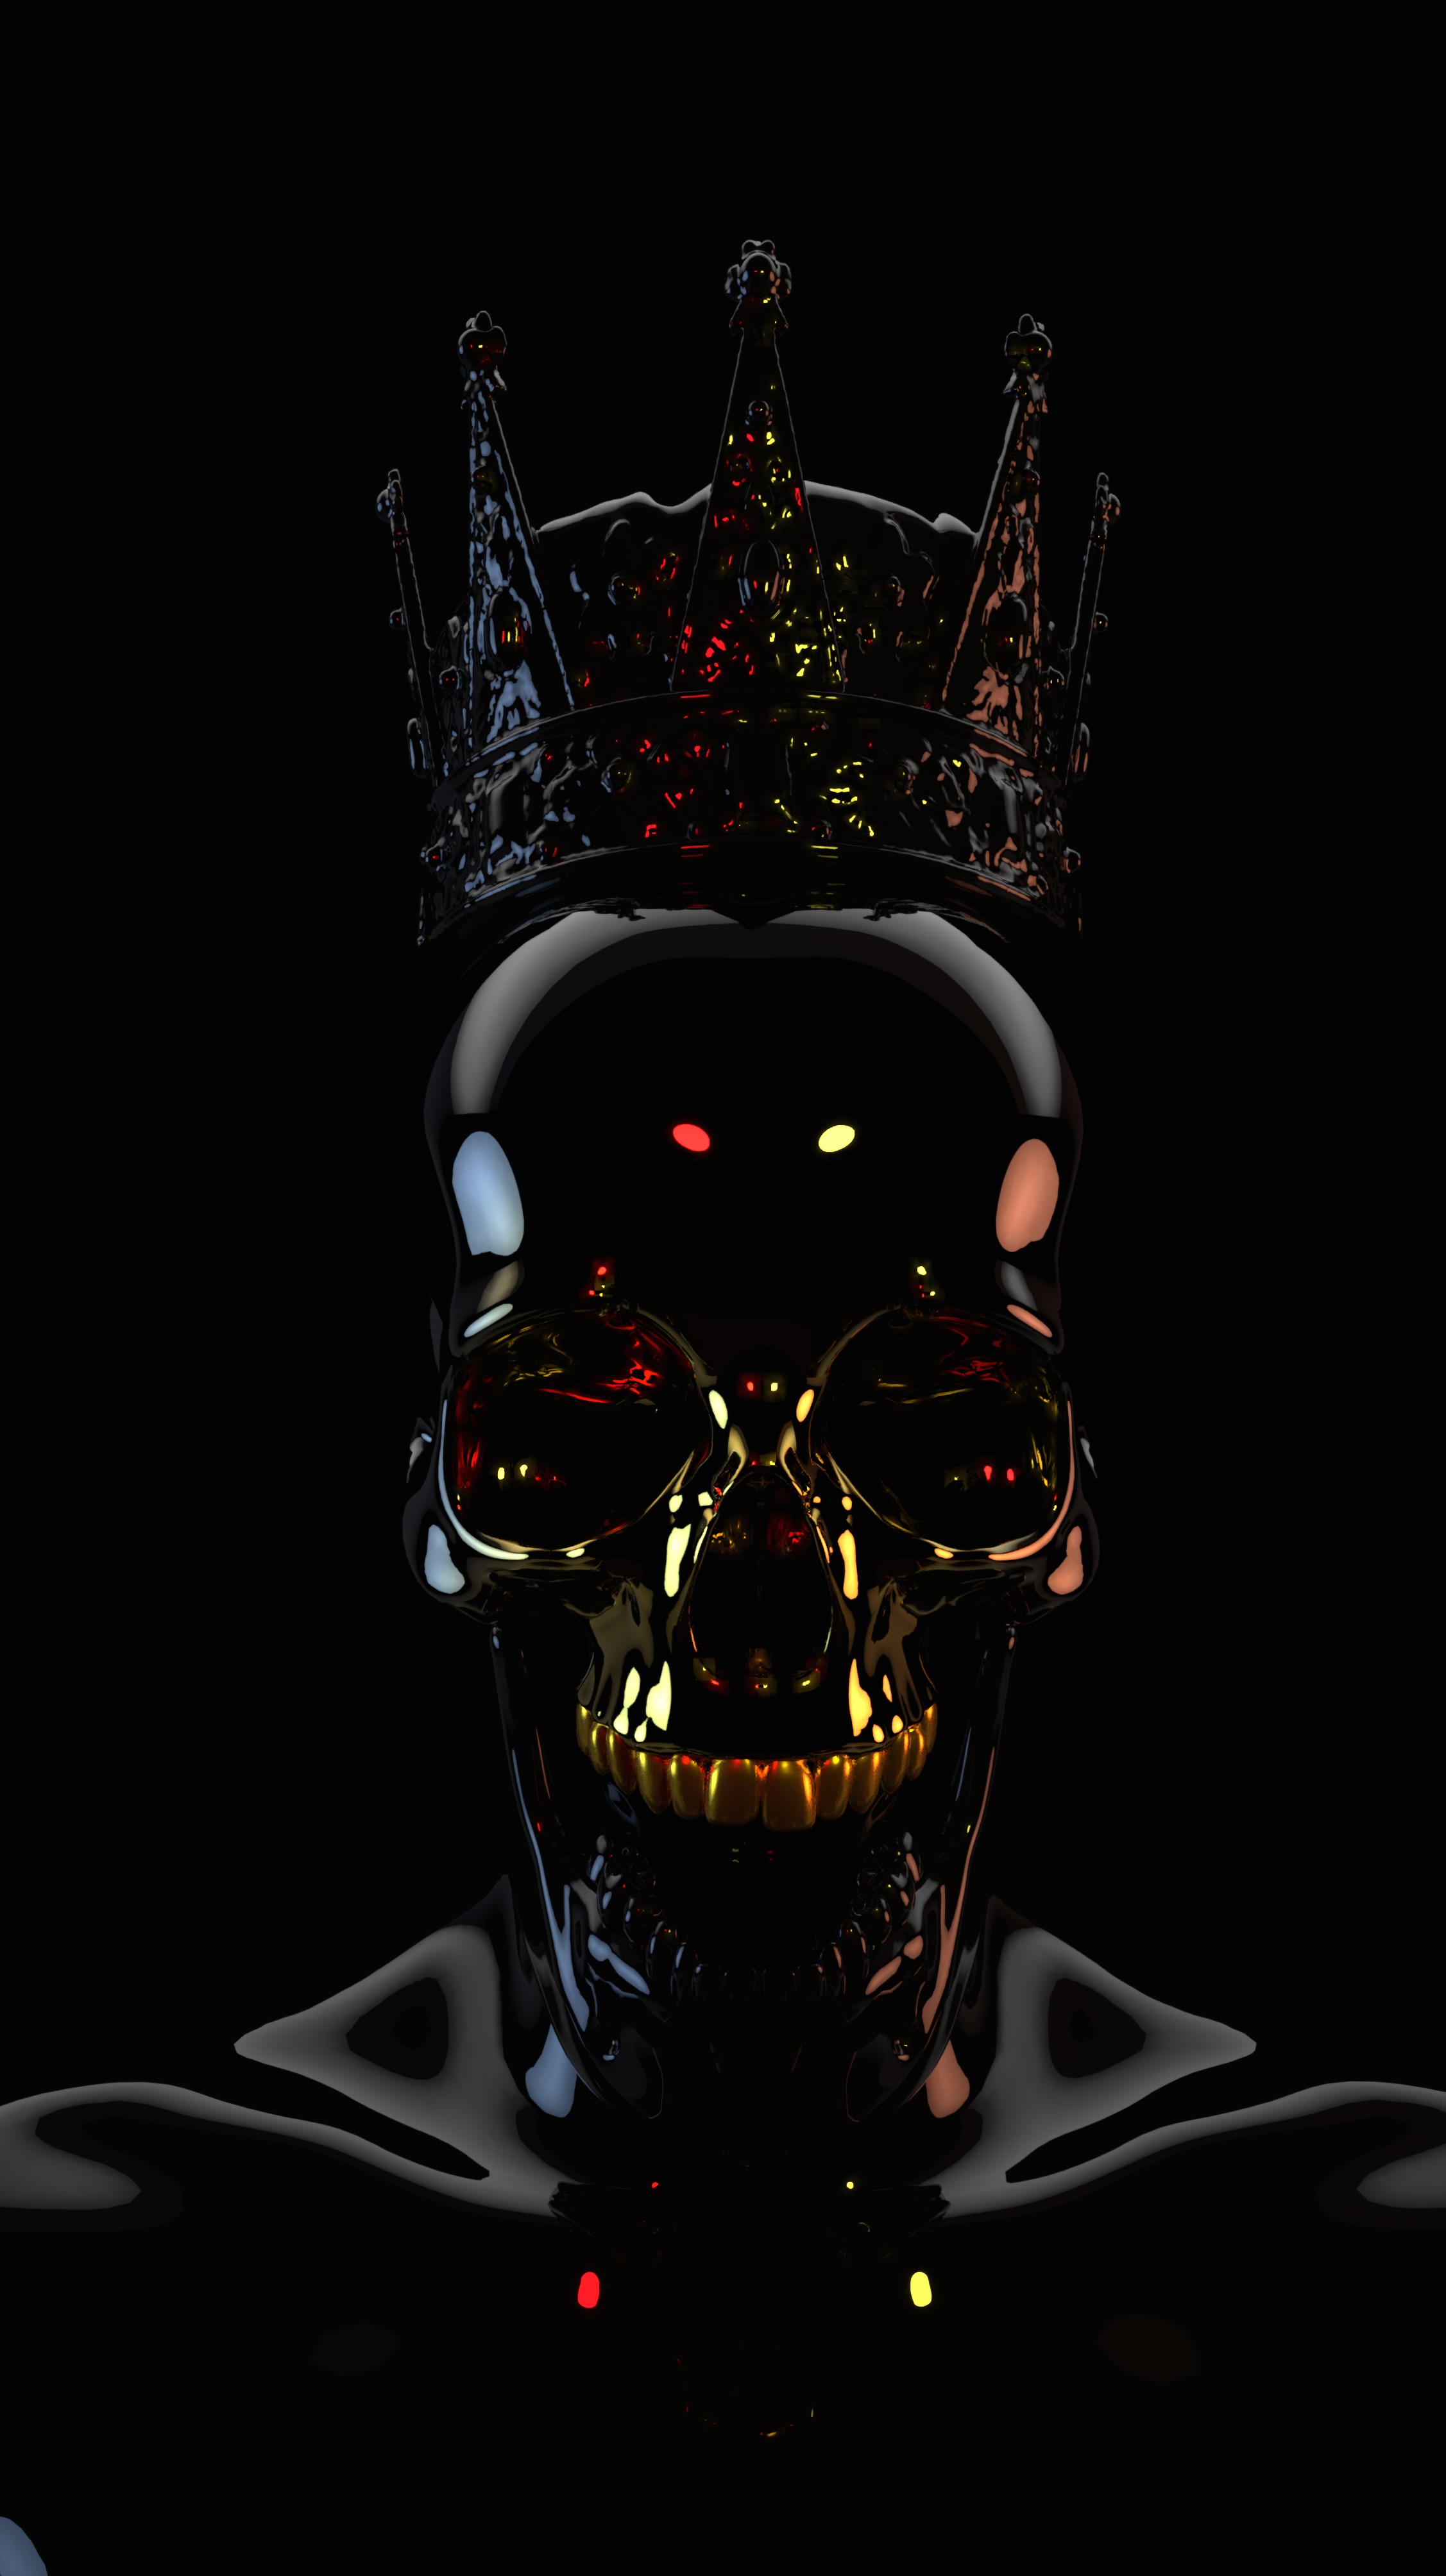 3d, dark, black, skull, crown phone background